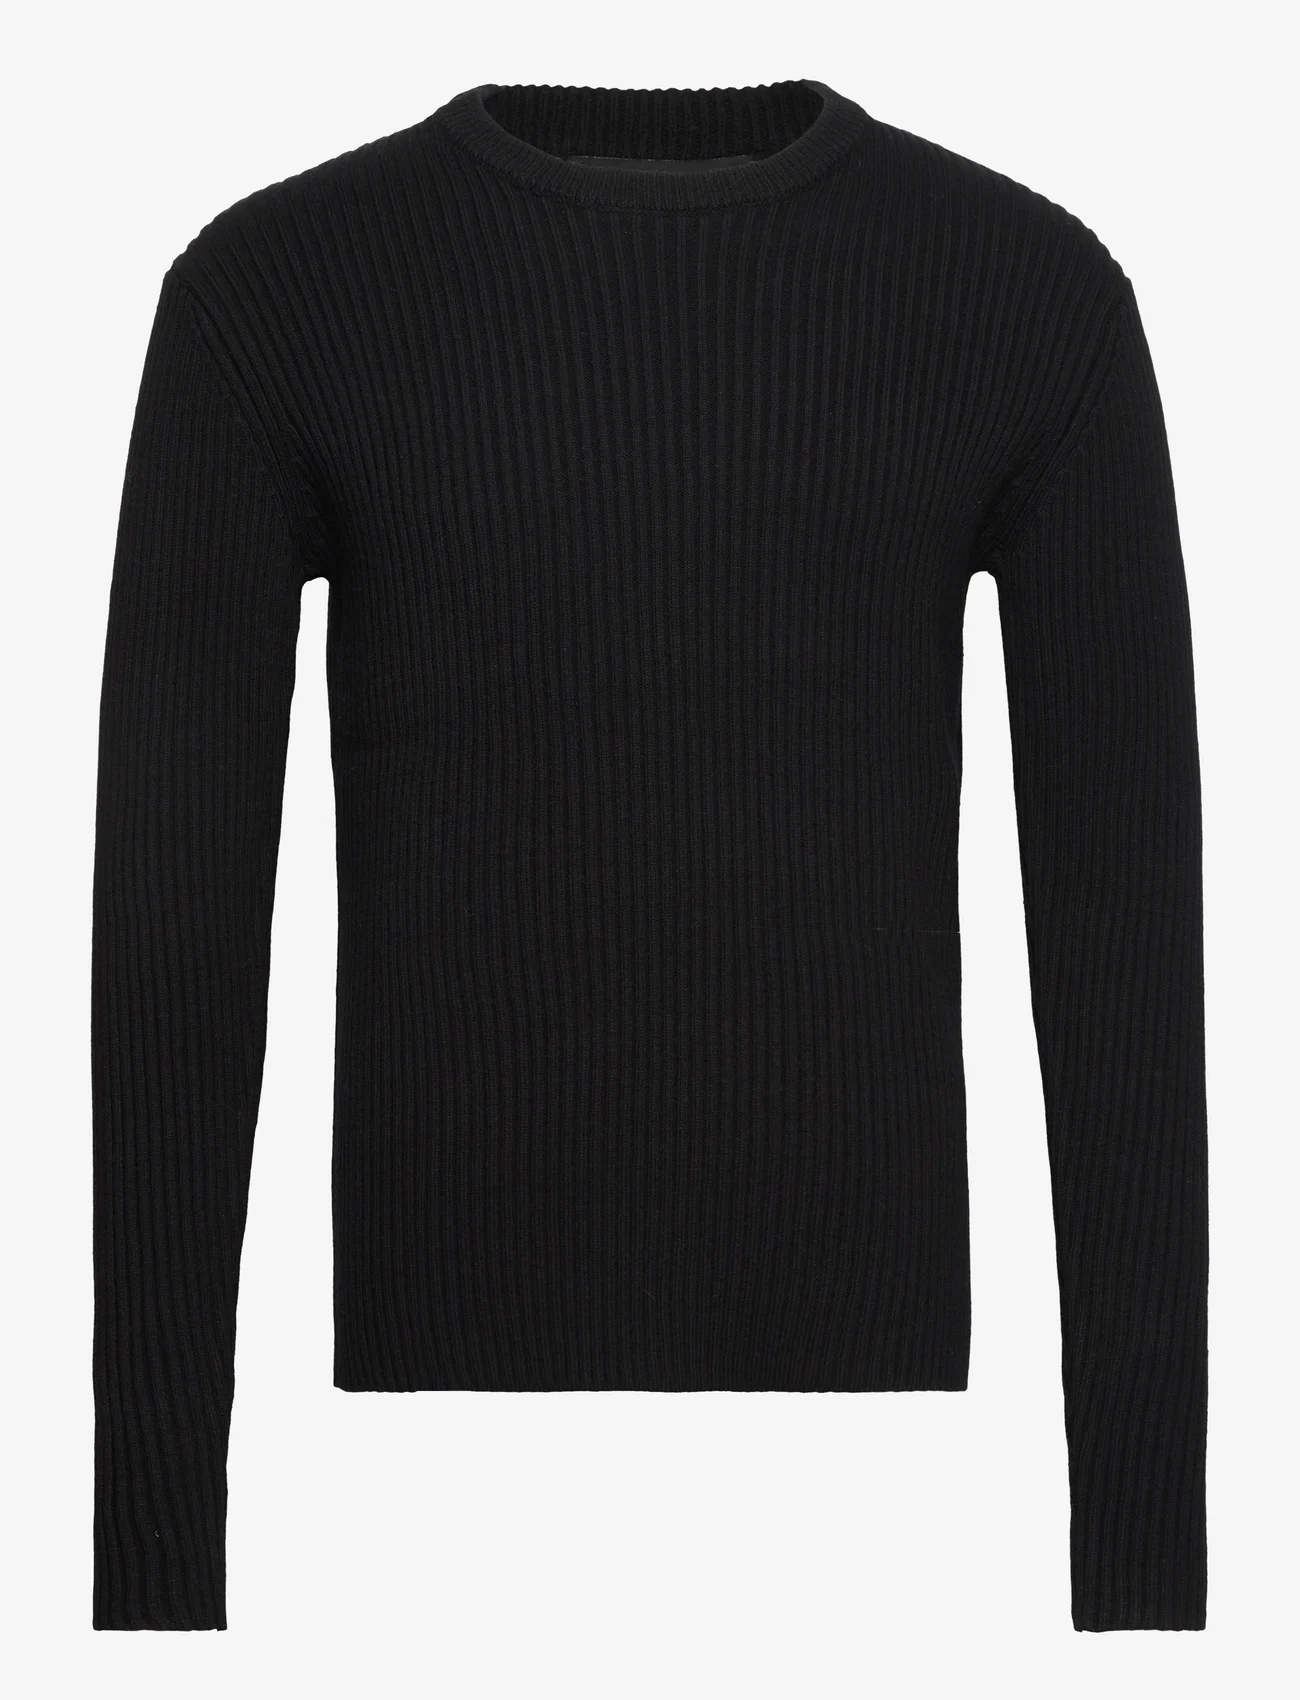 Bruuns Bazaar - SimBBBenny crew neck knit - knitted round necks - black - 0